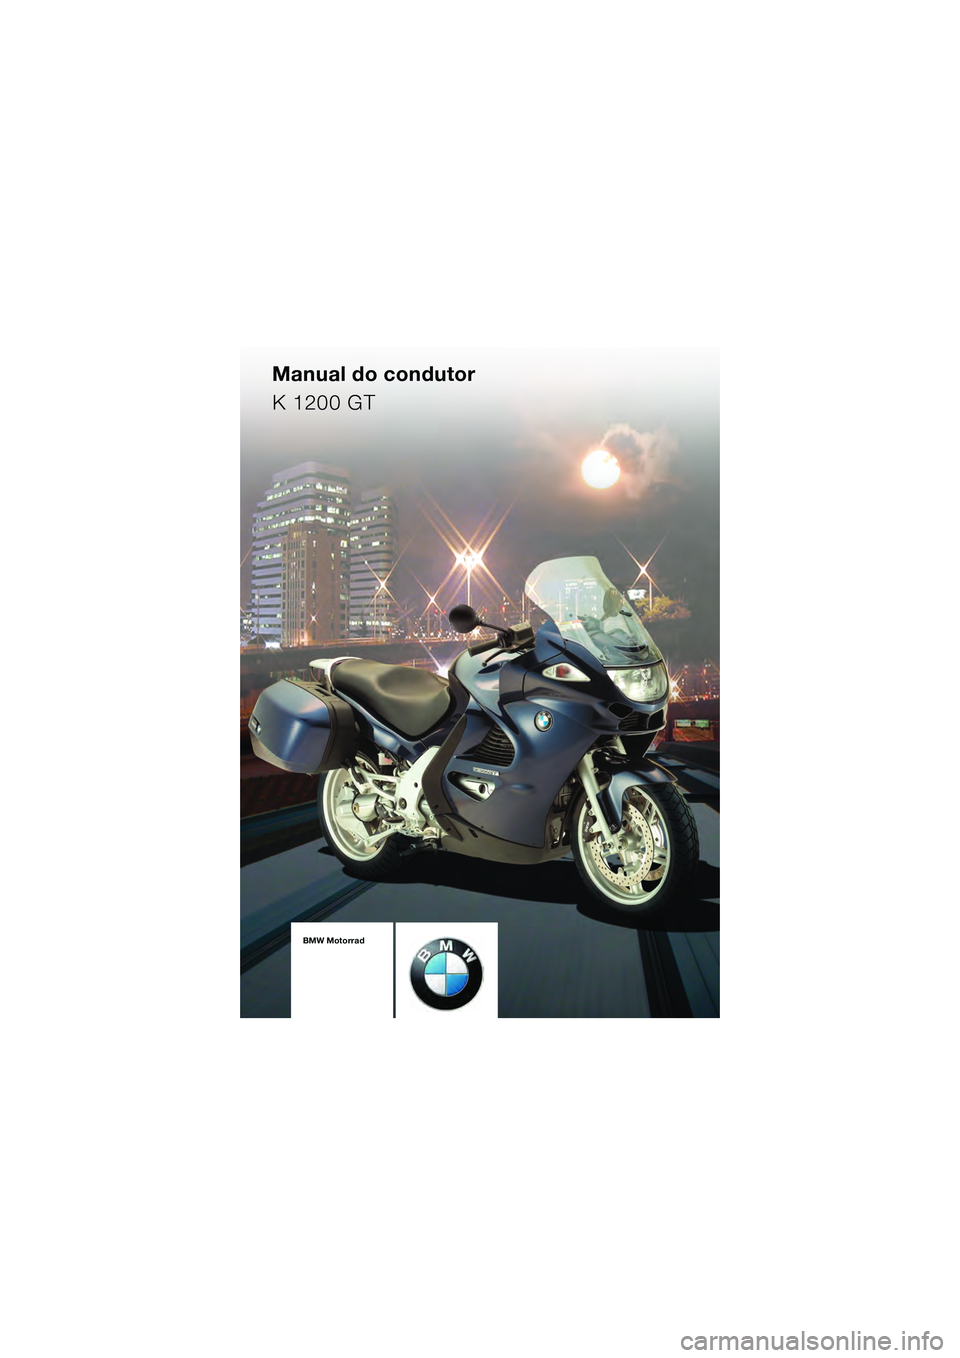 BMW MOTORRAD K 1200 GT 2004  Manual do condutor (in Portuguese) BMW Motorrad
Manual do condutor
K 1200 GT
10k41bkp3.book  Seite 1  Mittwoch,  26. Mai 2004  8:19 20 